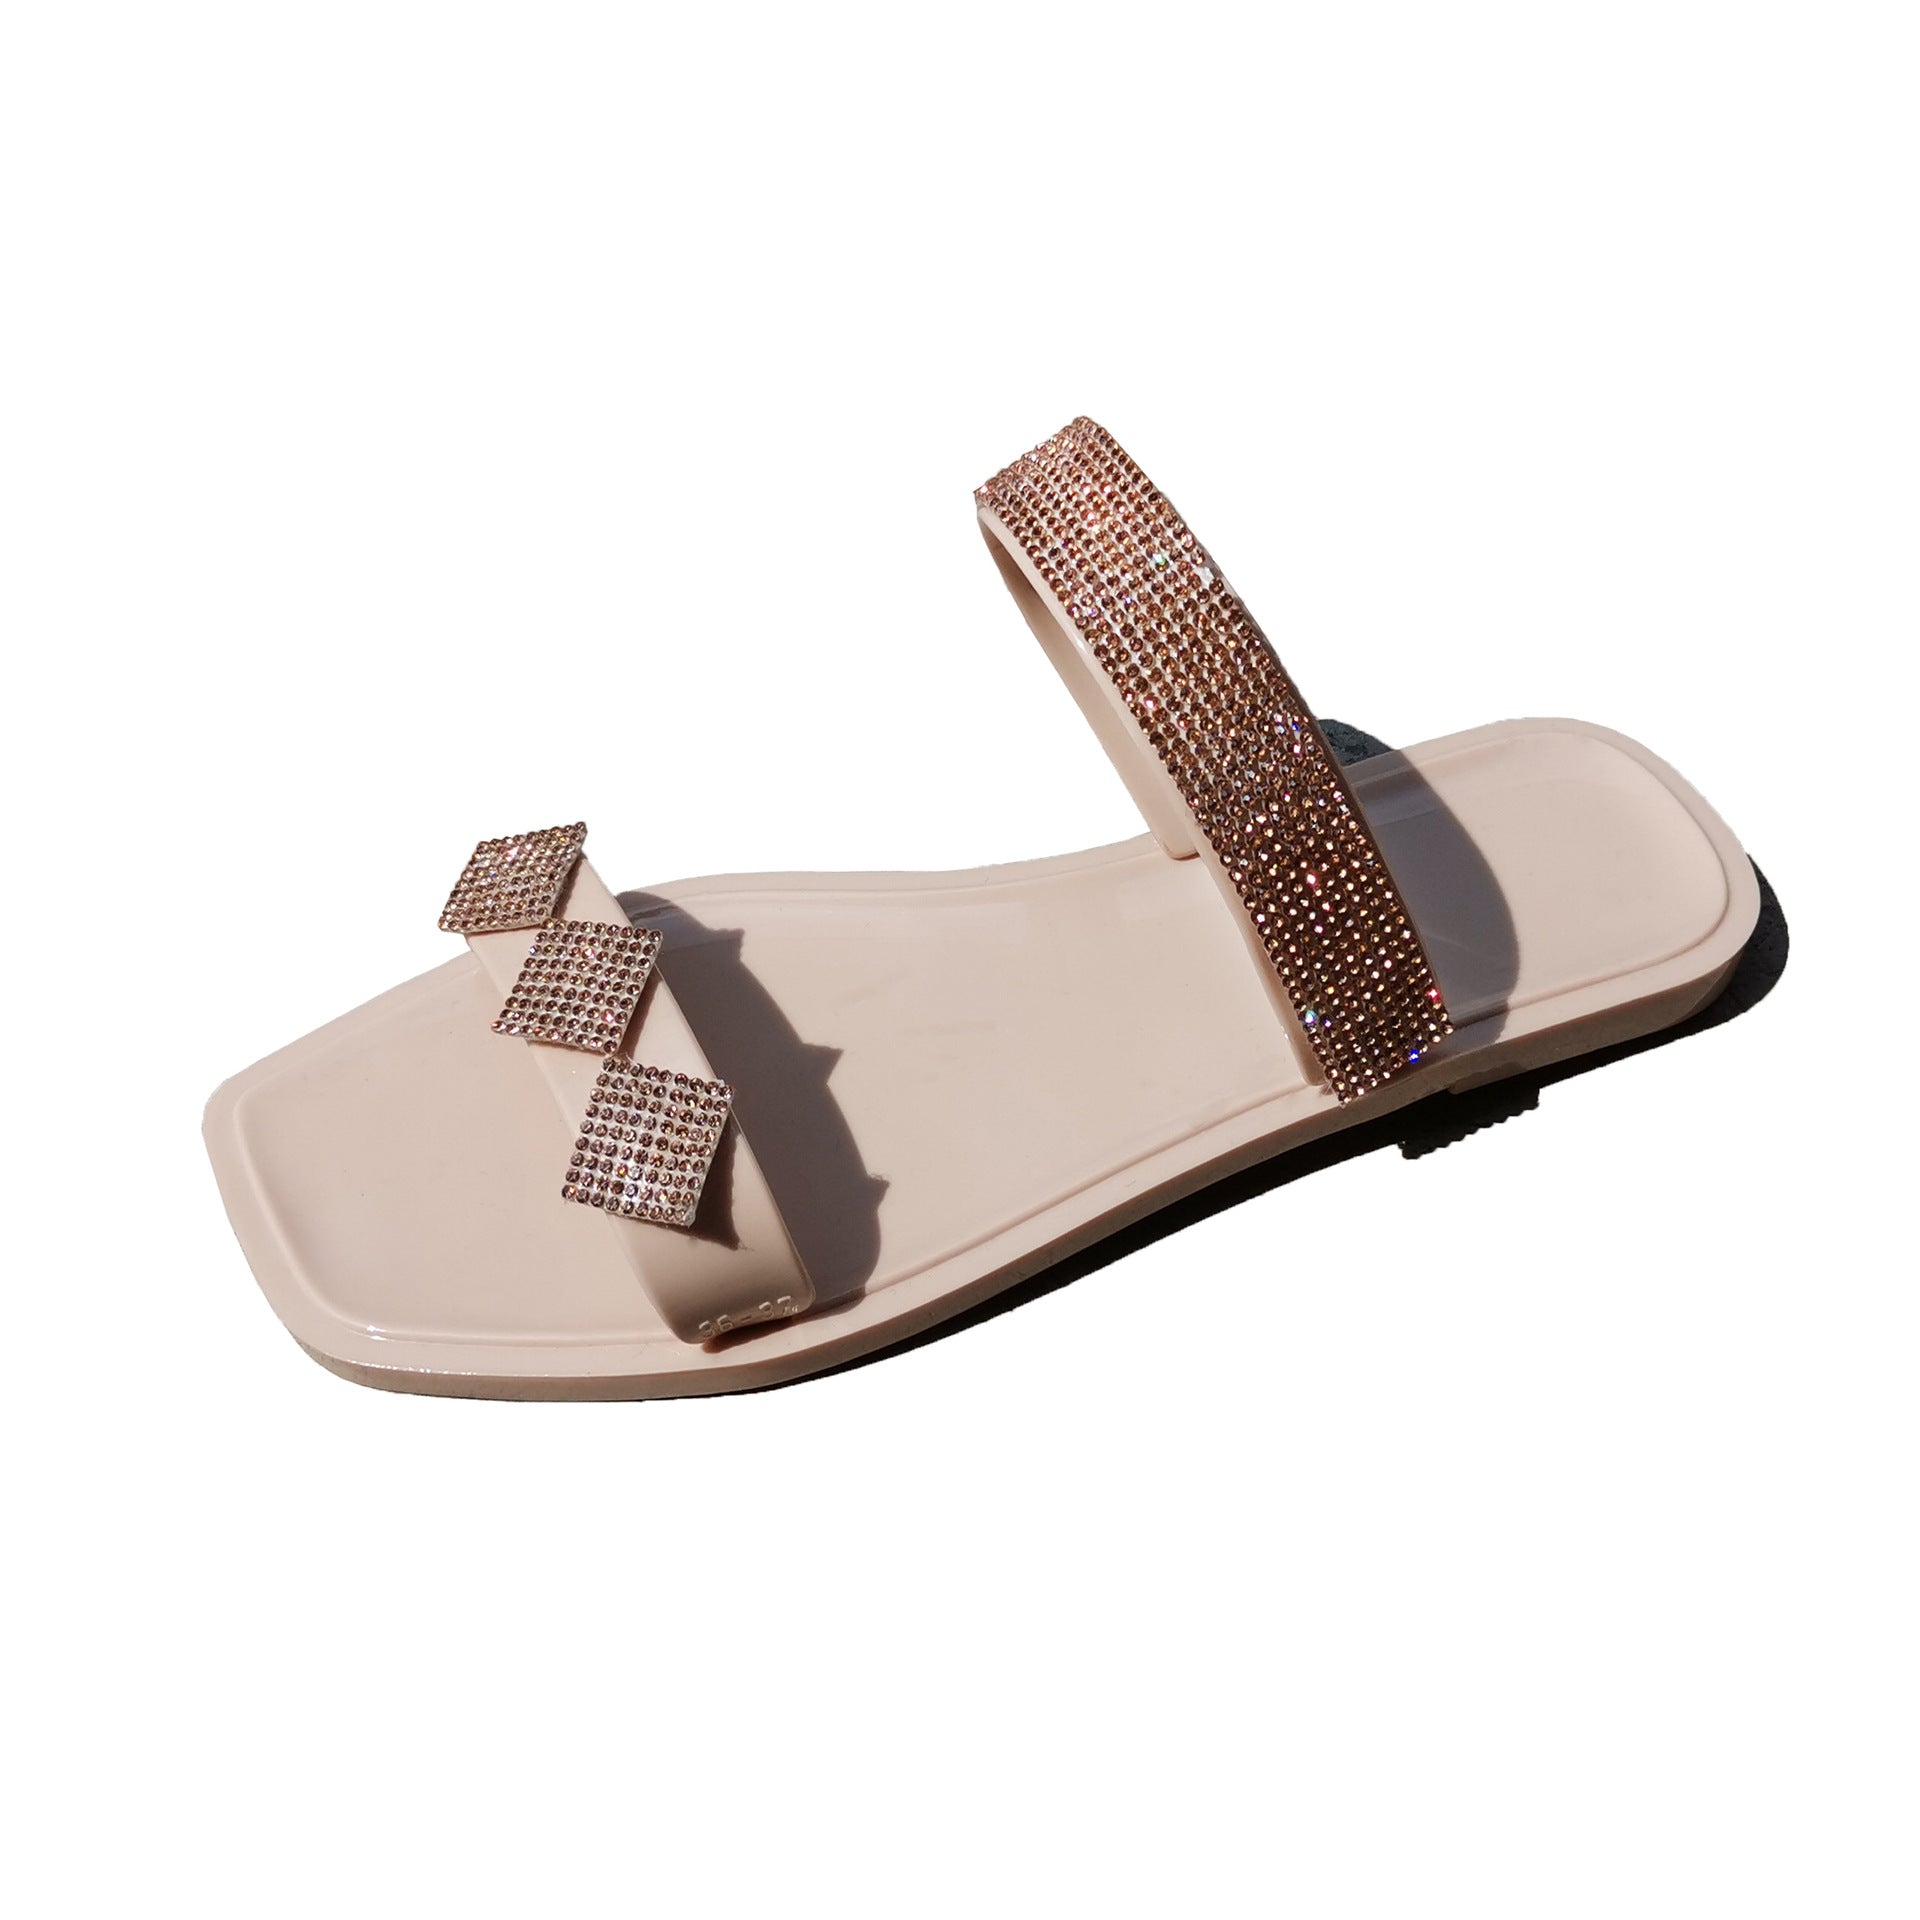 Women's Fashionable Square Toe Two-strap Light Diamond Sandals